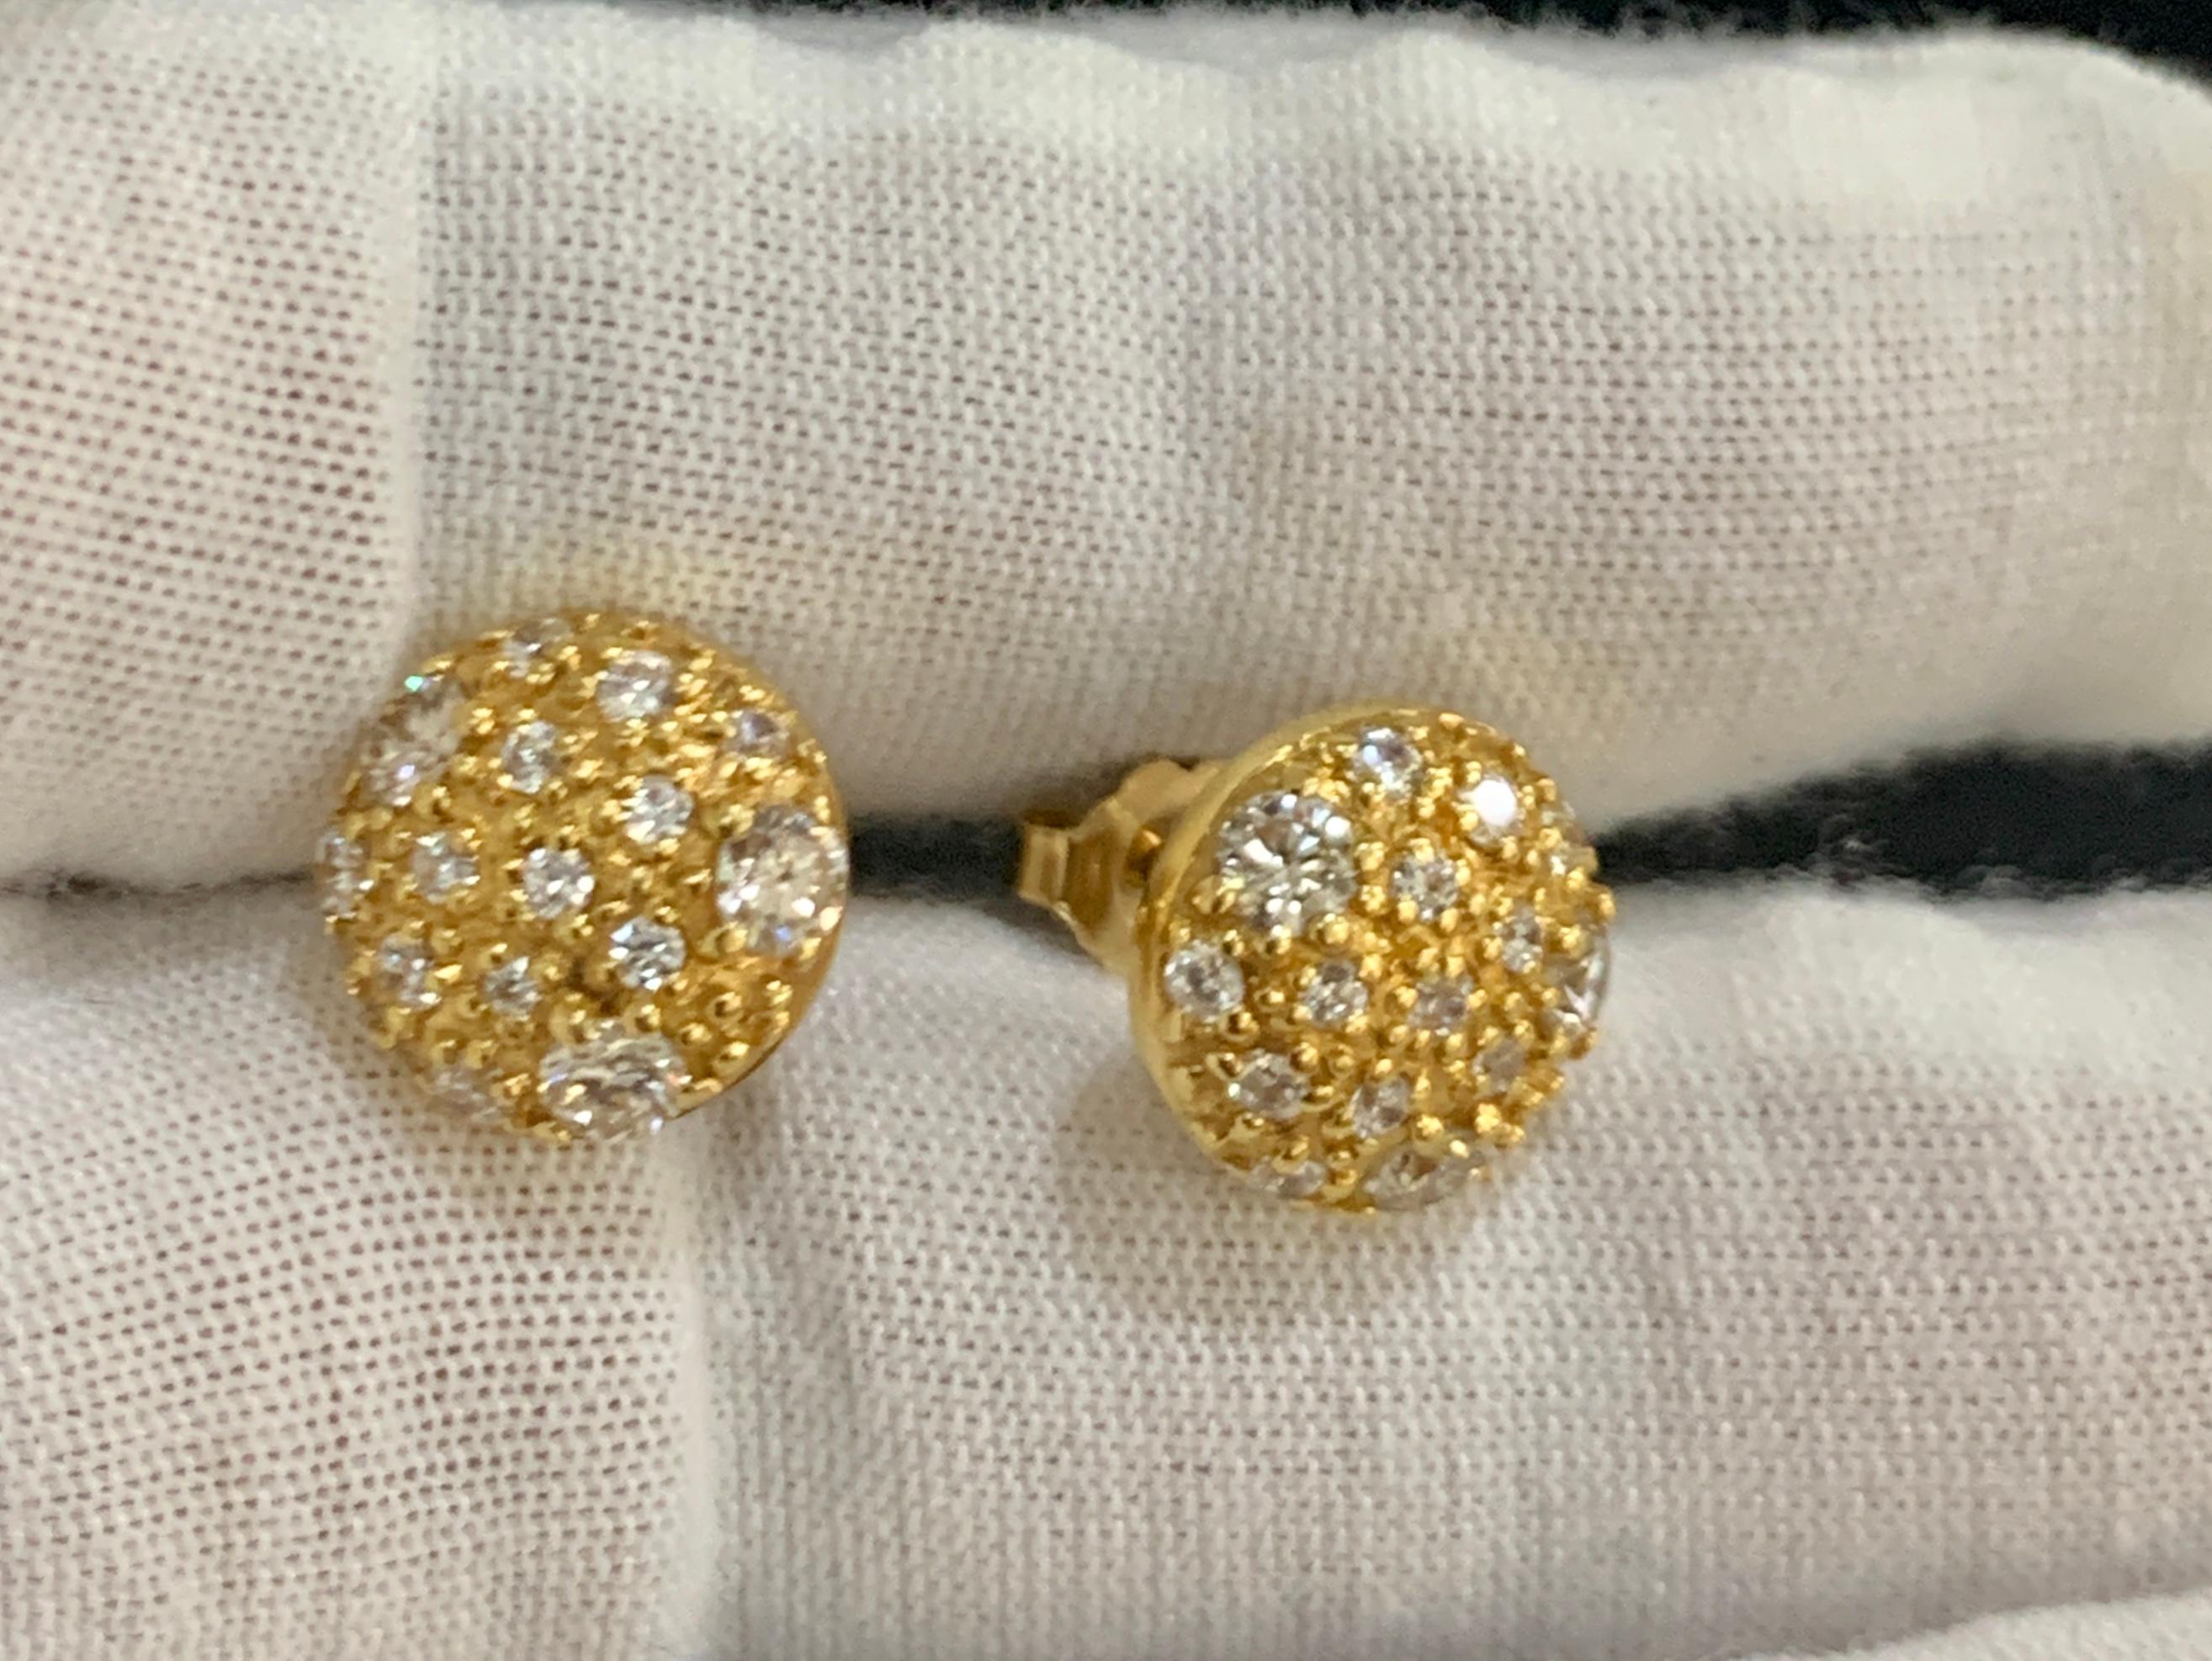 2 Carat Diamond Floral Cluster Flower Stud Earrings in 14 Karat Yellow Gold 1